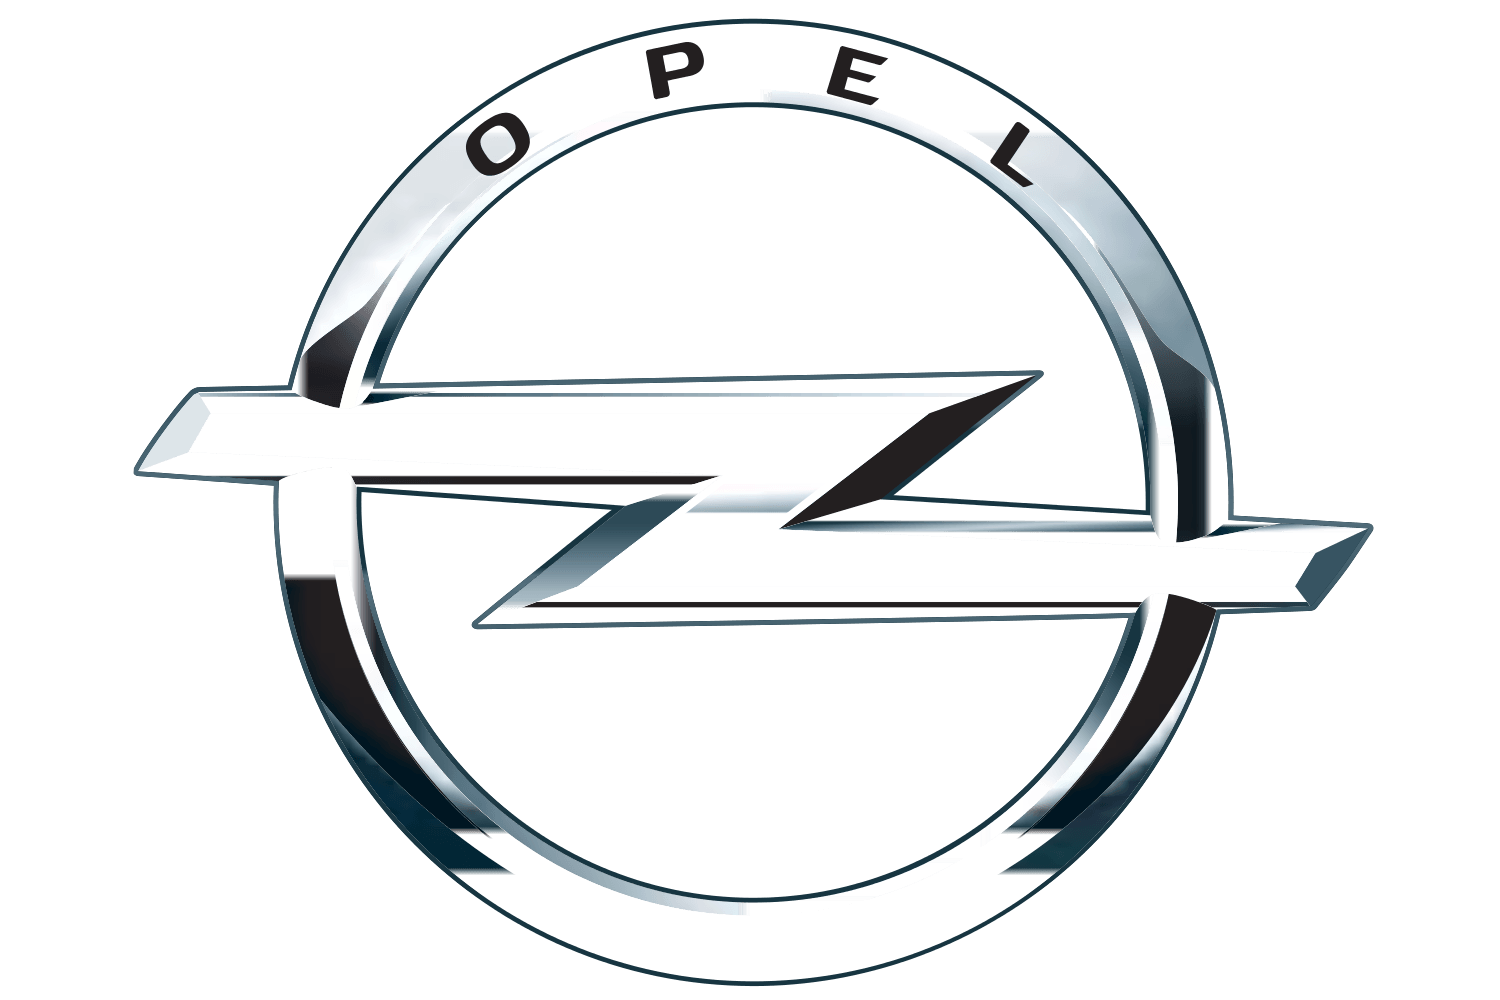 Opel Logo - Opel Logo, Opel Car Symbol and History | Car Brand Names.com